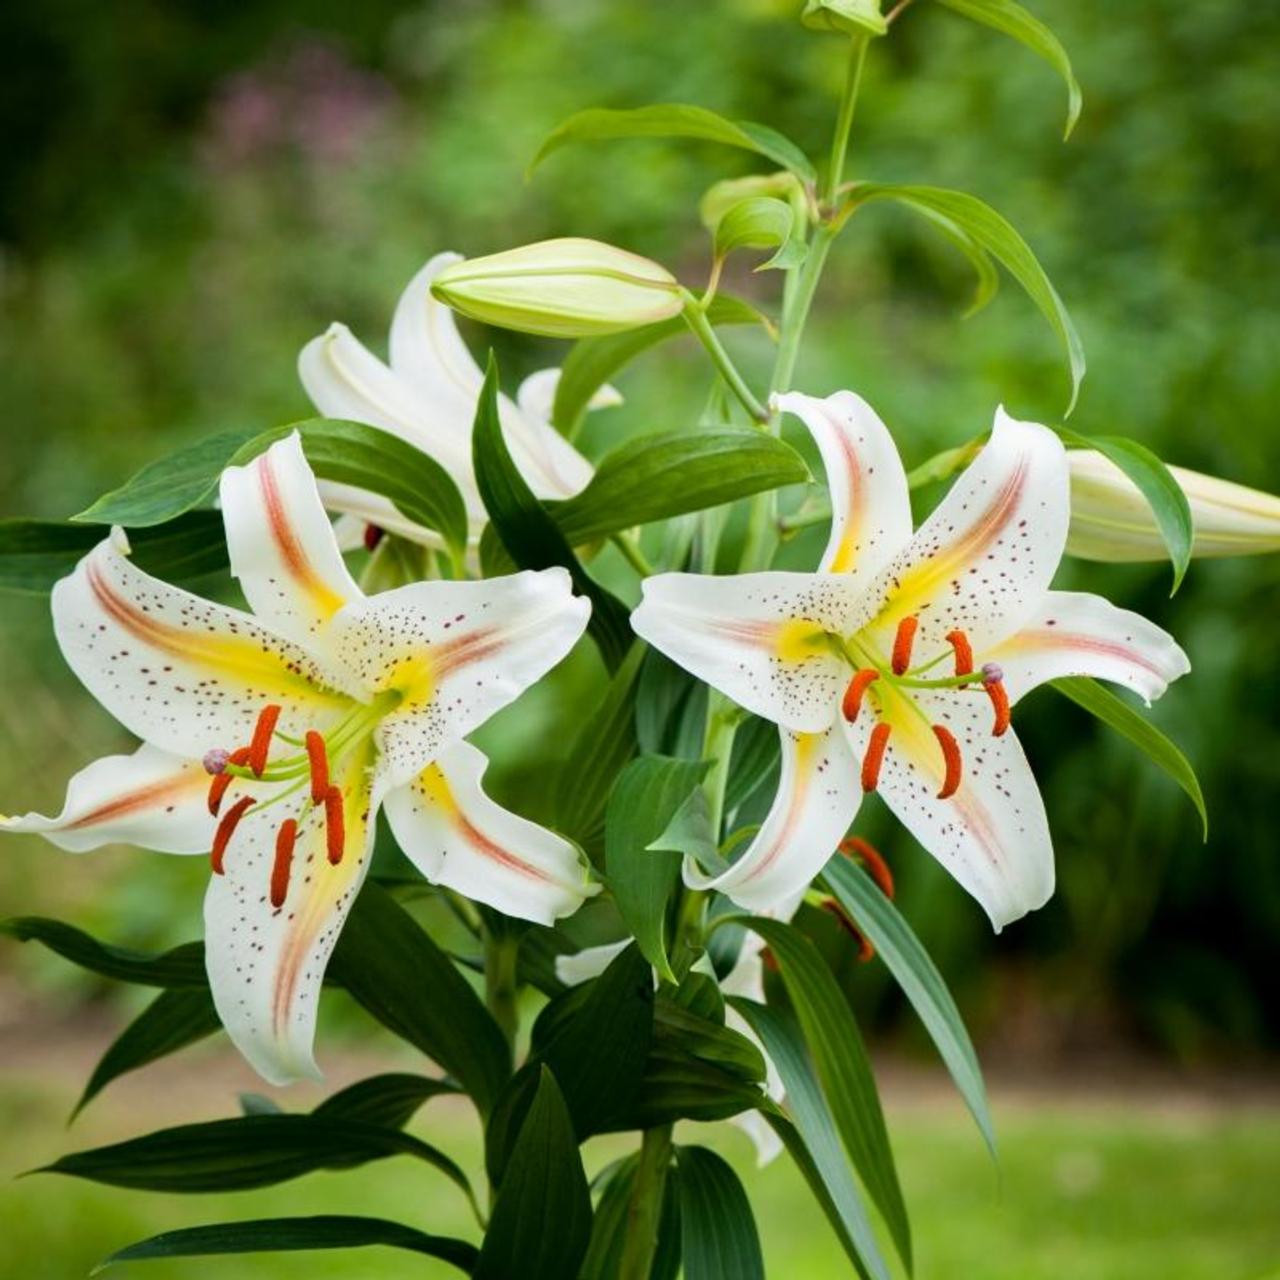 Lilium 'Garden Party' plant